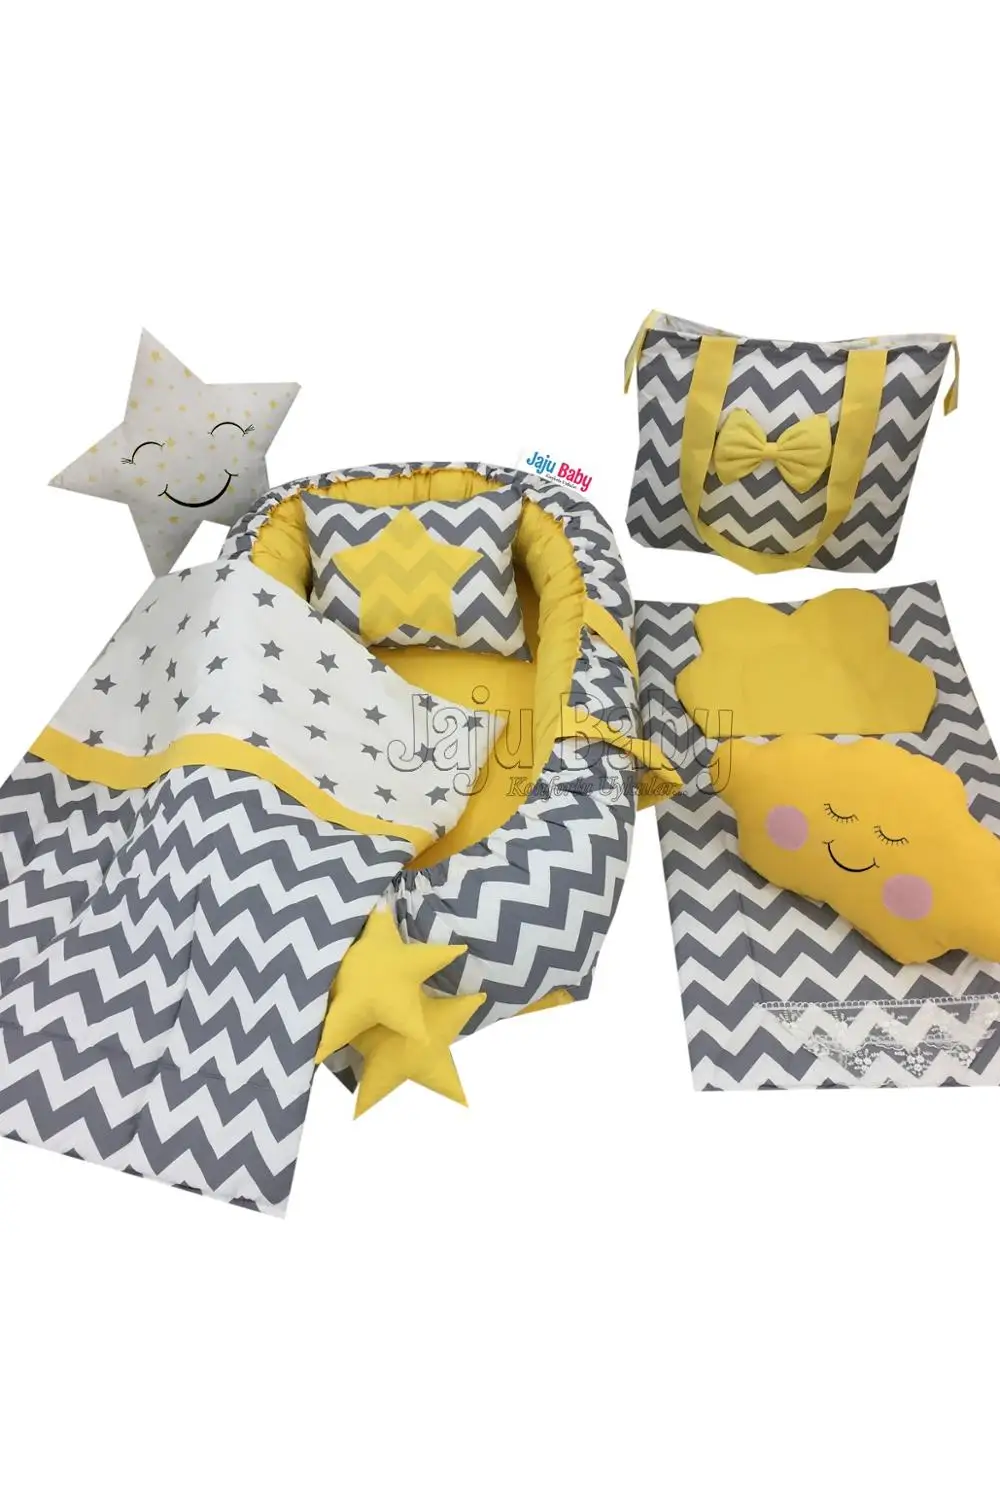 Jaju Baby Handmade Gray Zigzag Yellow Design Orthopedic Luxury Babynest 8 Piece Set Baby Bed Mother Side Portable Baby Bed